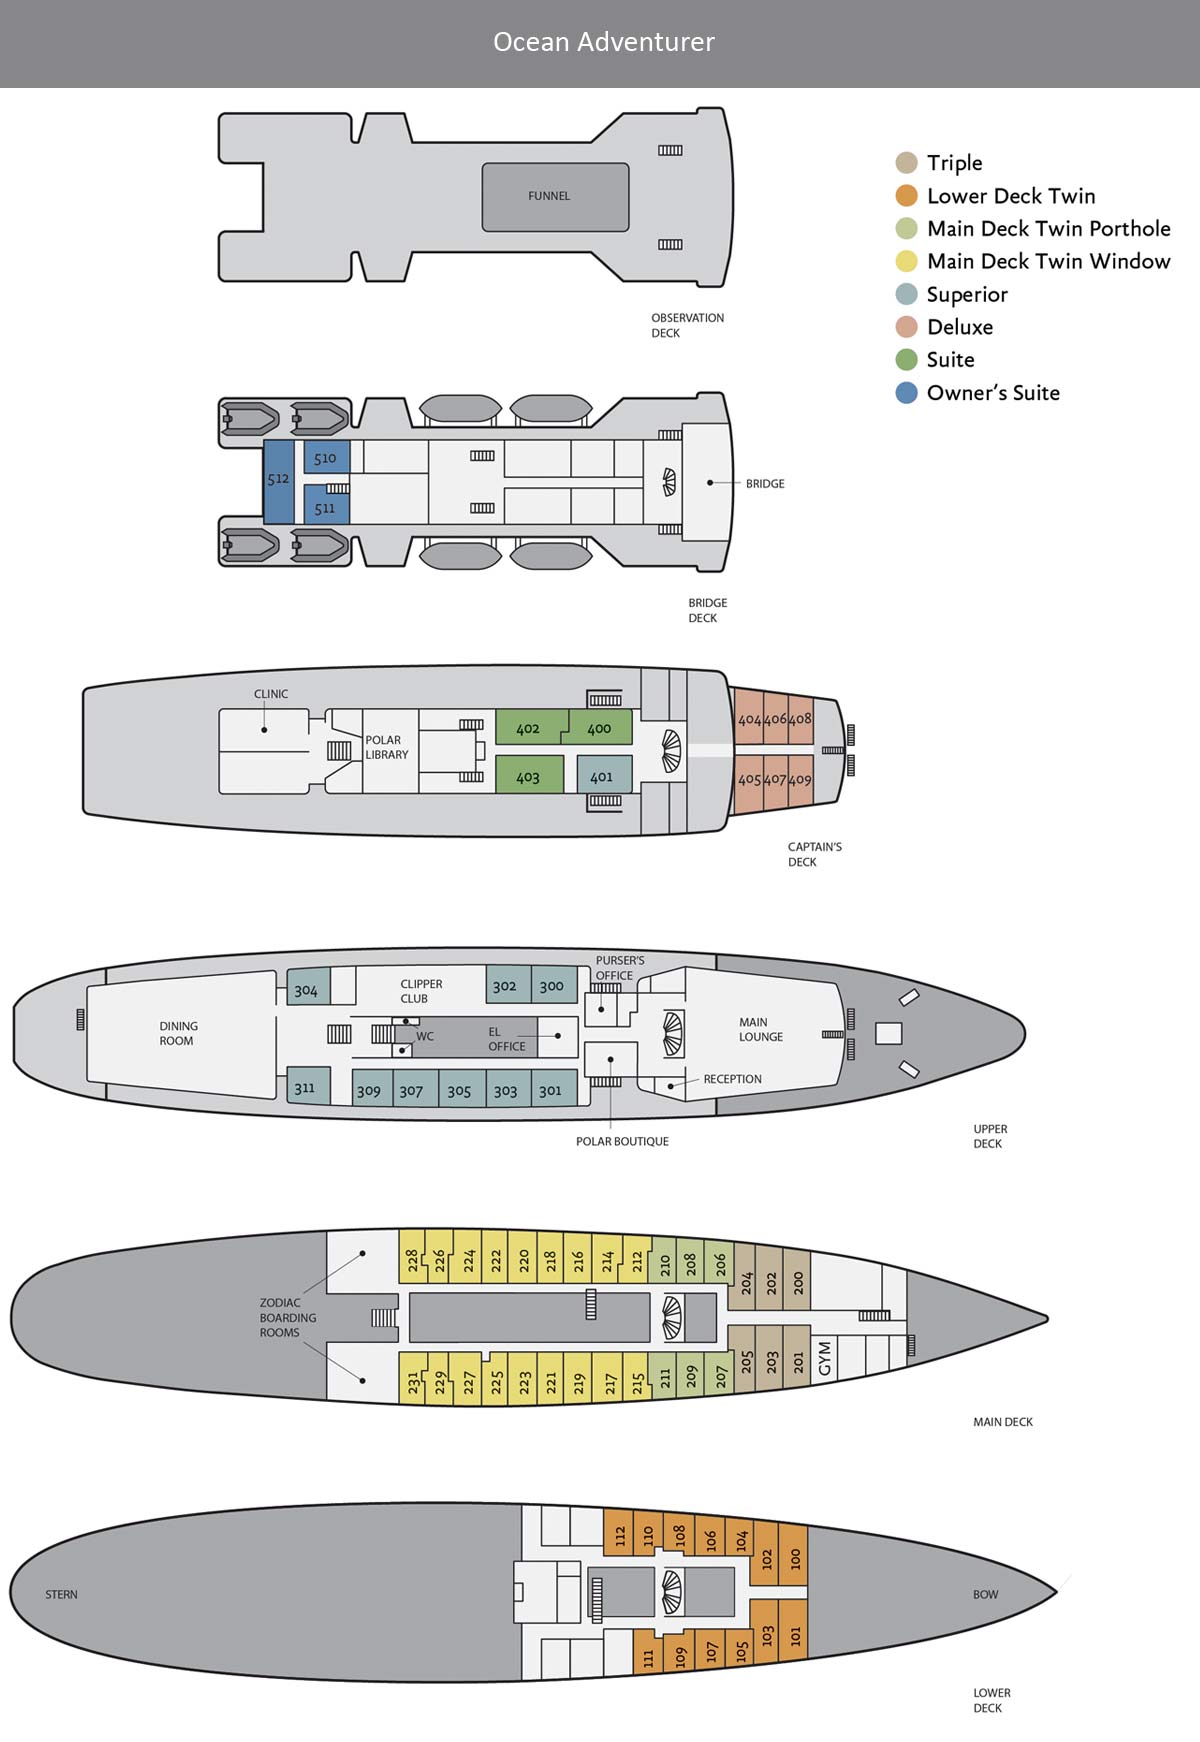 Ocean Adventurer deck plan